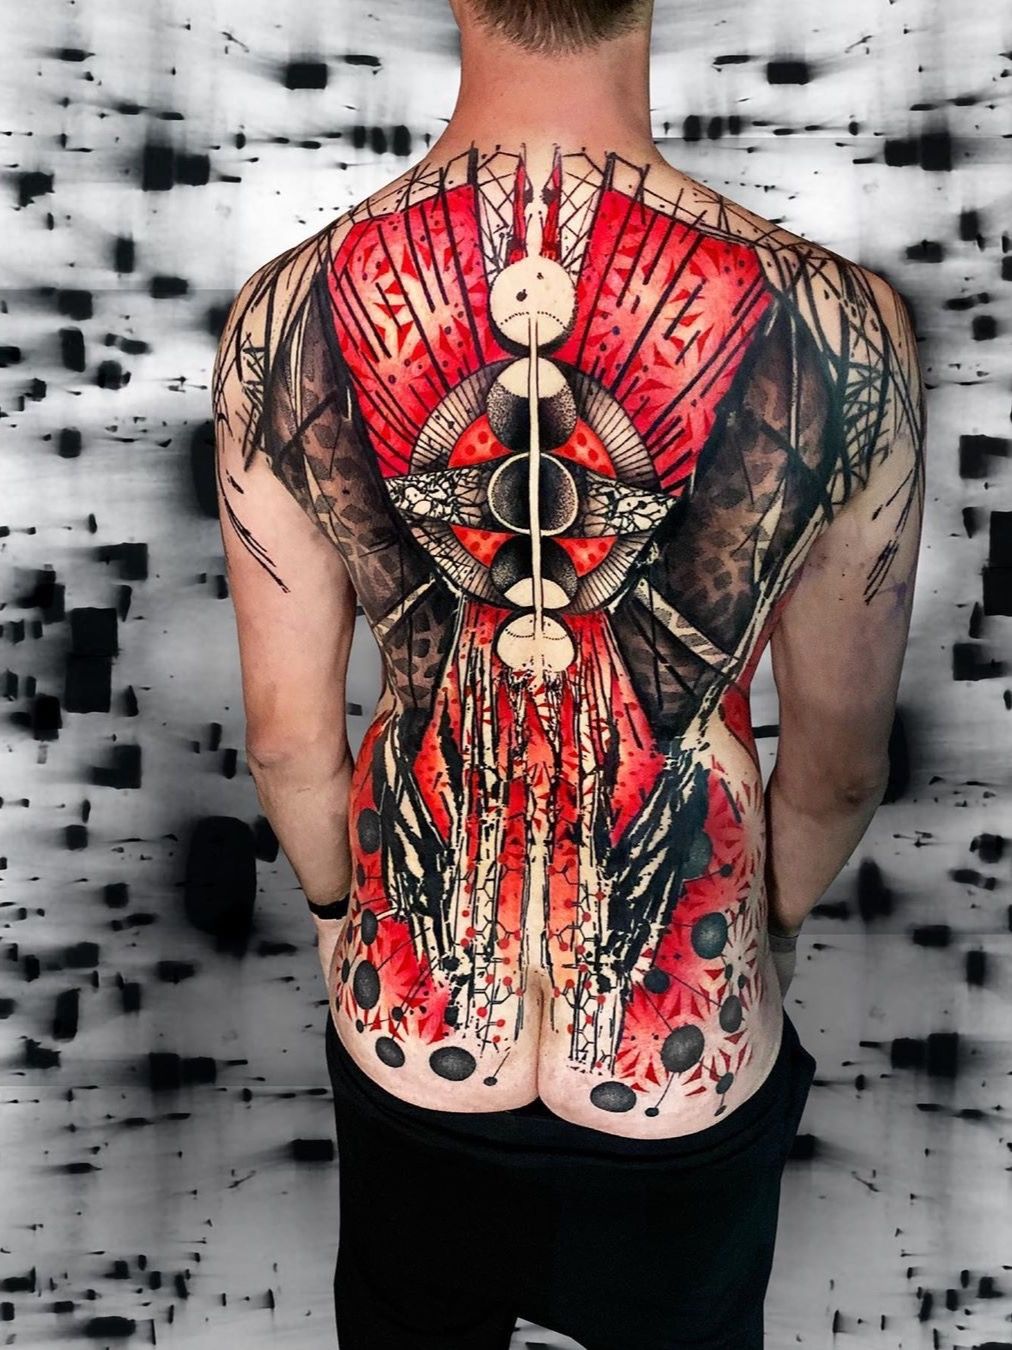 101 Best Bodysuit Tattoo Ideas That Will Blow Your Mind!